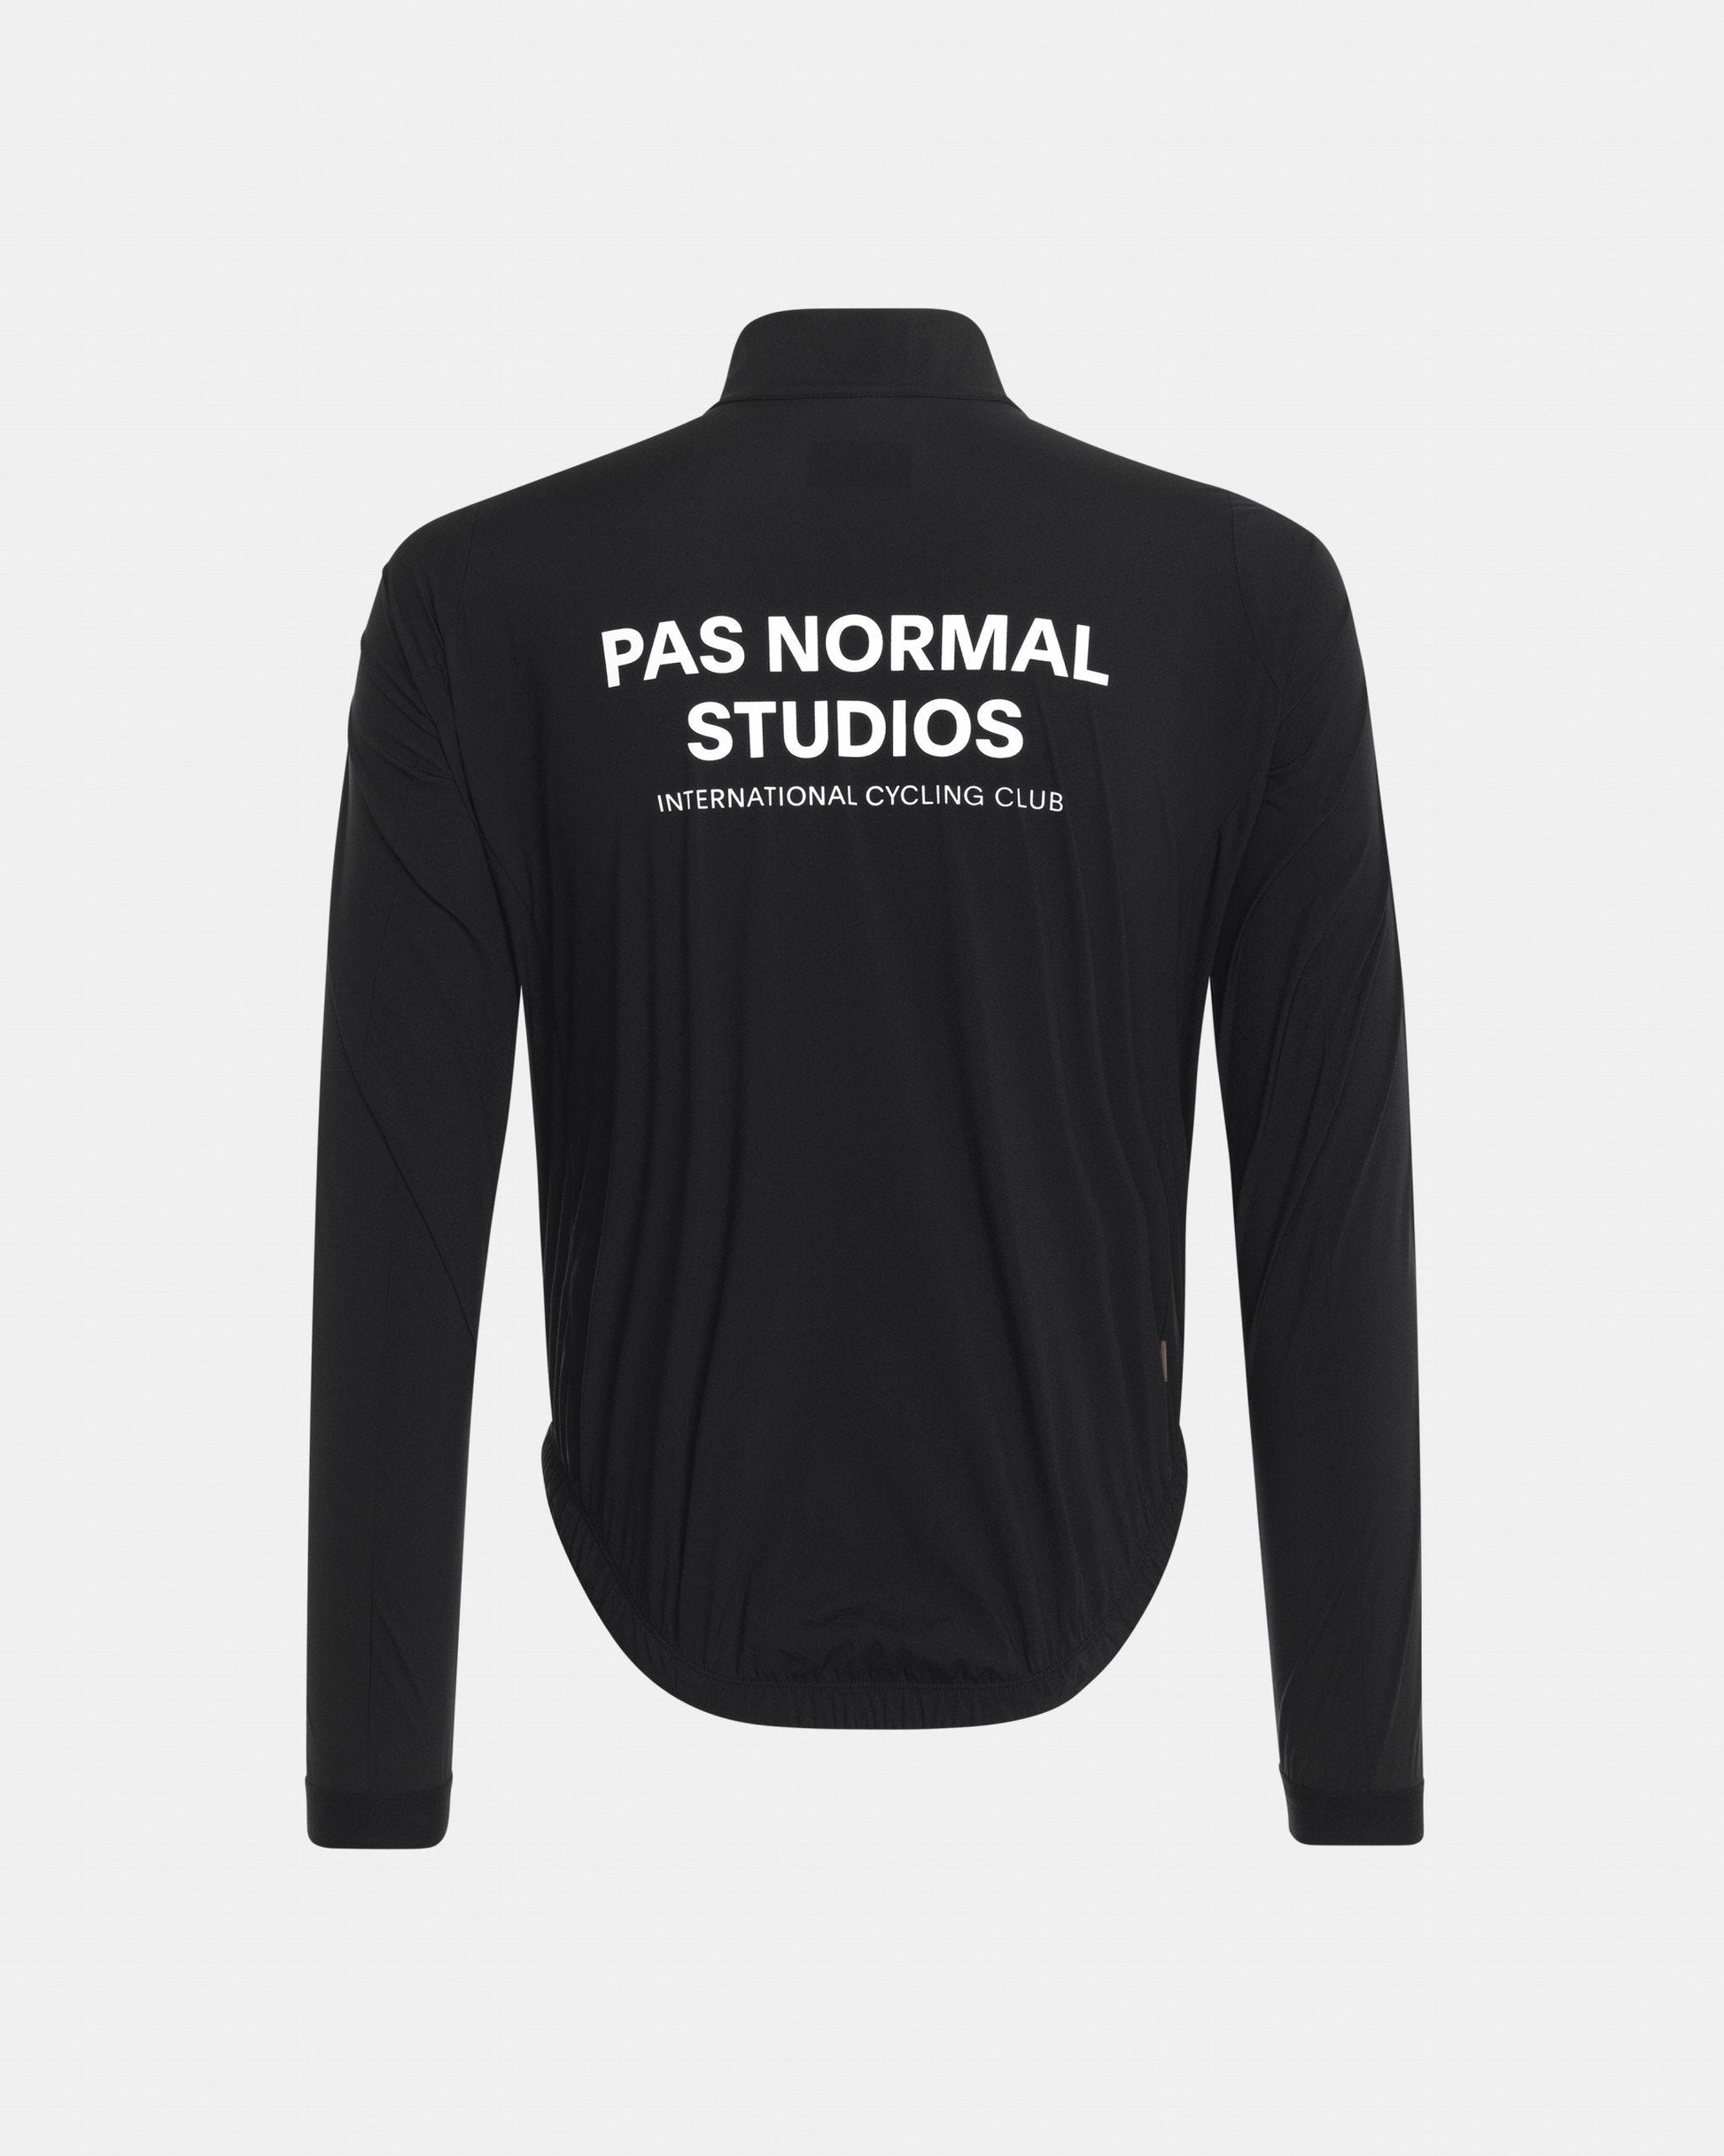 Pas Normal Studios - Manteau Stow Away Femme Manteaux Pas Normal Studios 